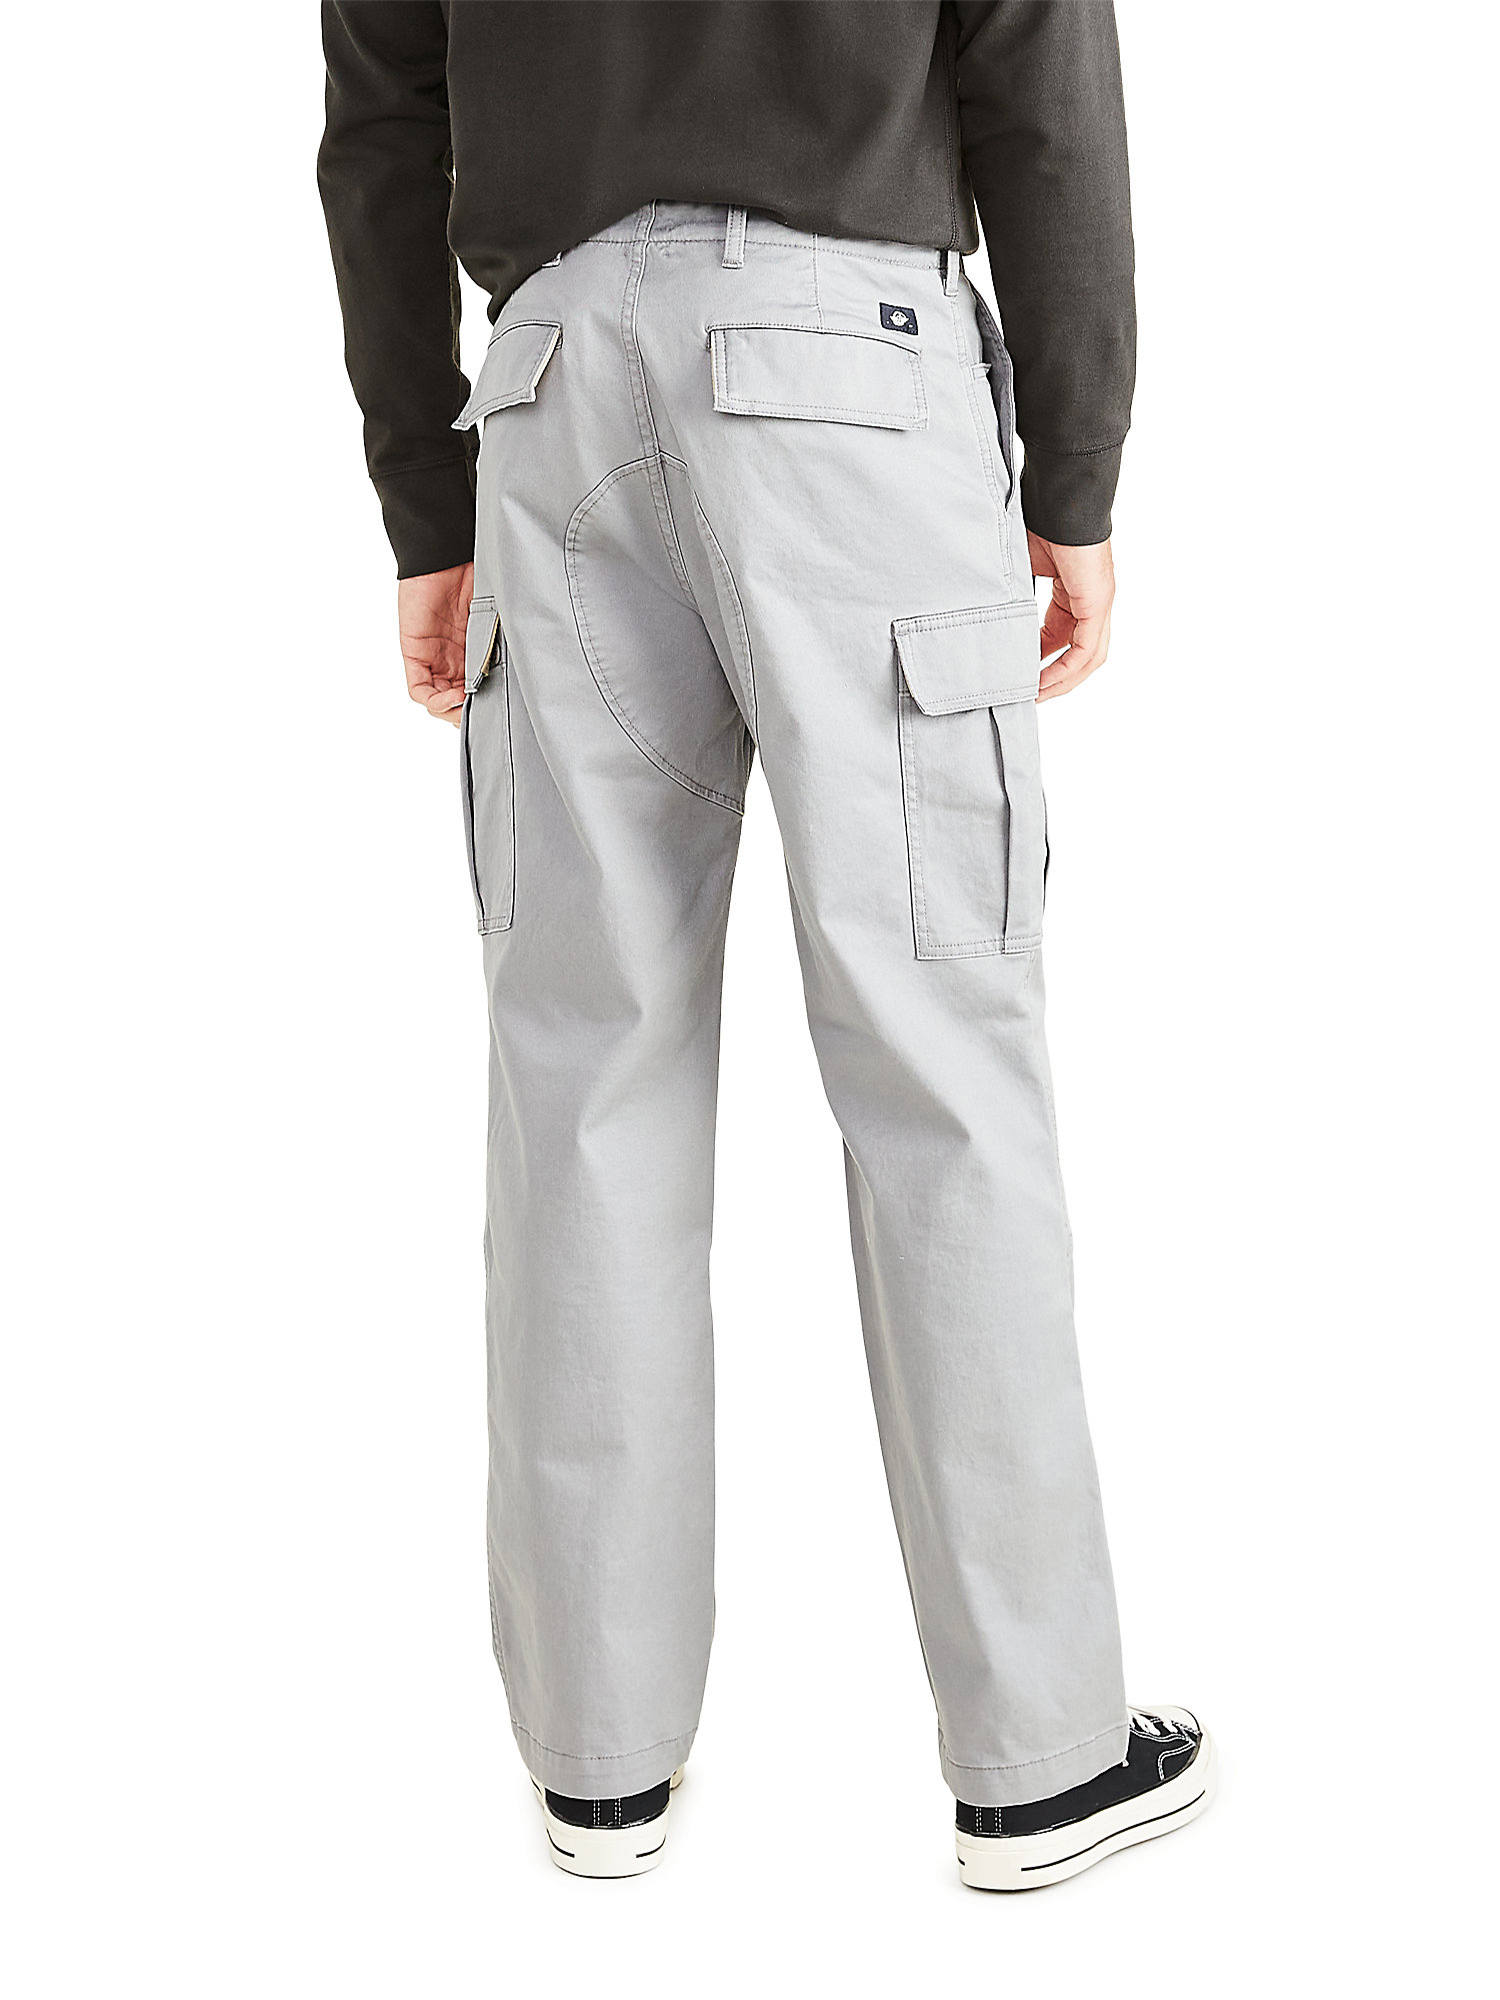 Dockers Men's Relaxed Fit Cargo Pants - Walmart.com